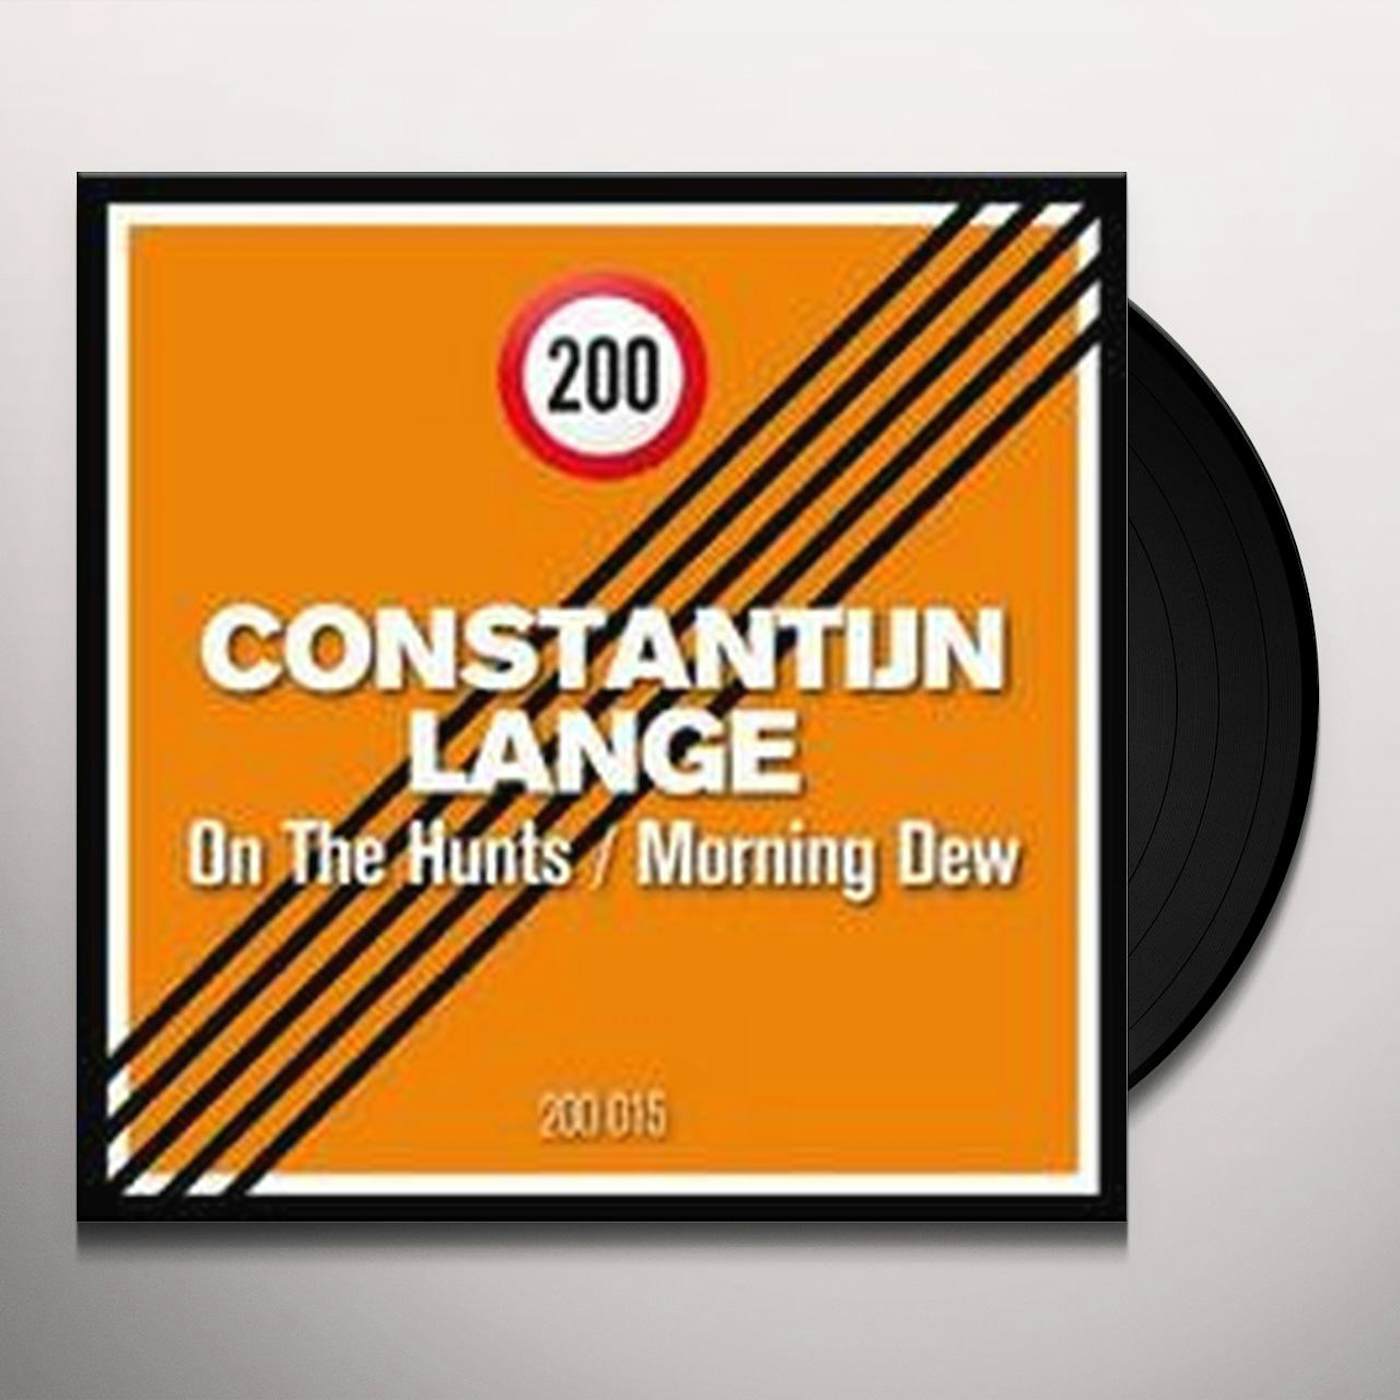 Constantijn Lange On the Hunts / Morning Dew Vinyl Record